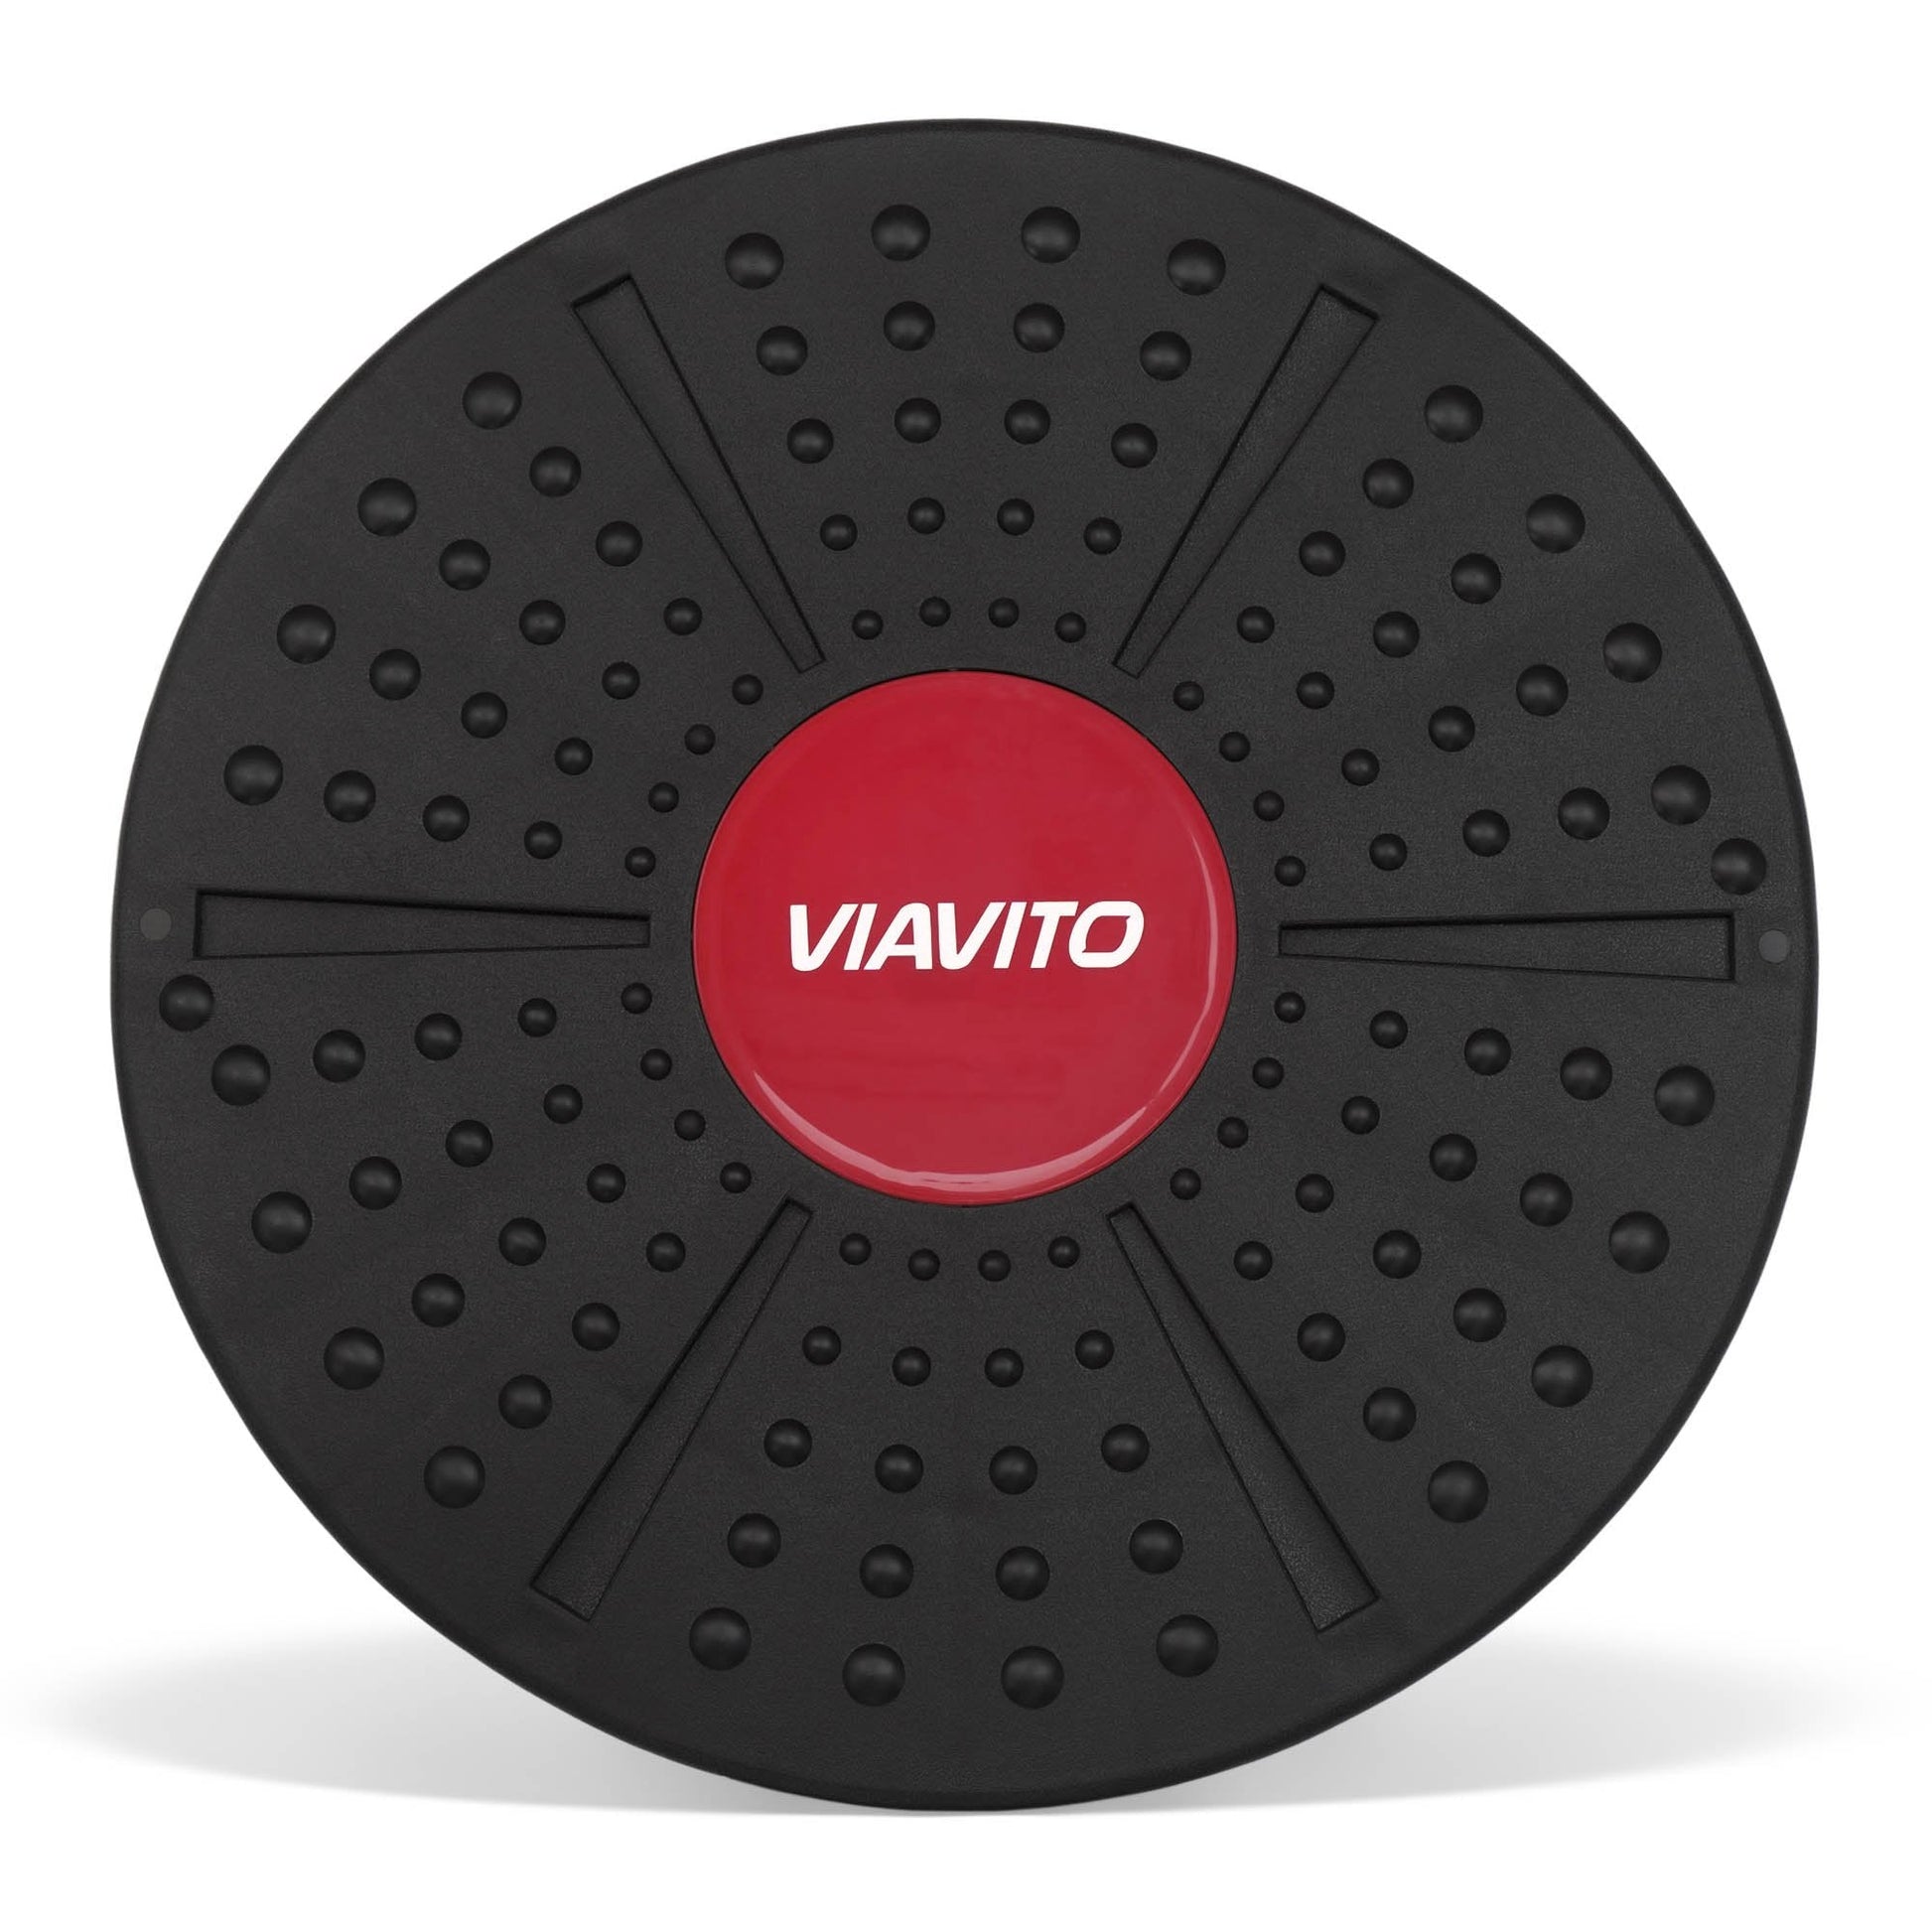 |Viavito Adjustable Balance Board - Above|